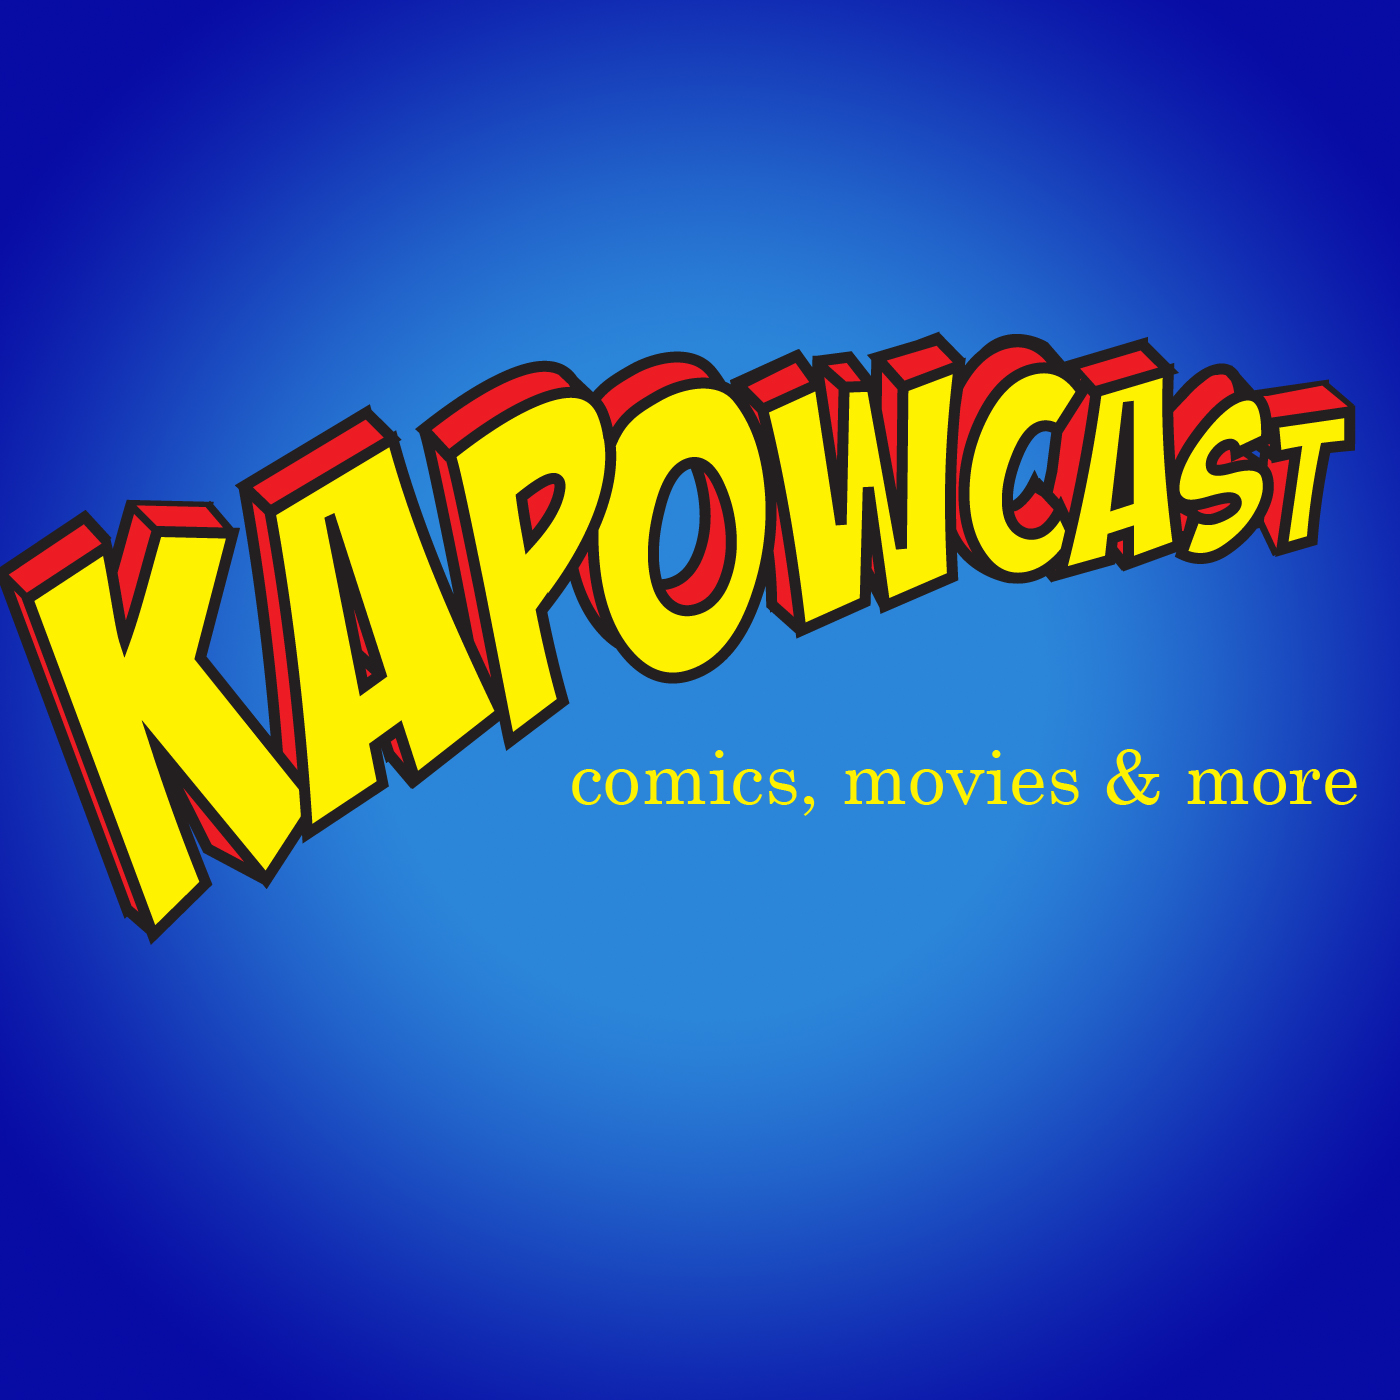 Kapowcast!